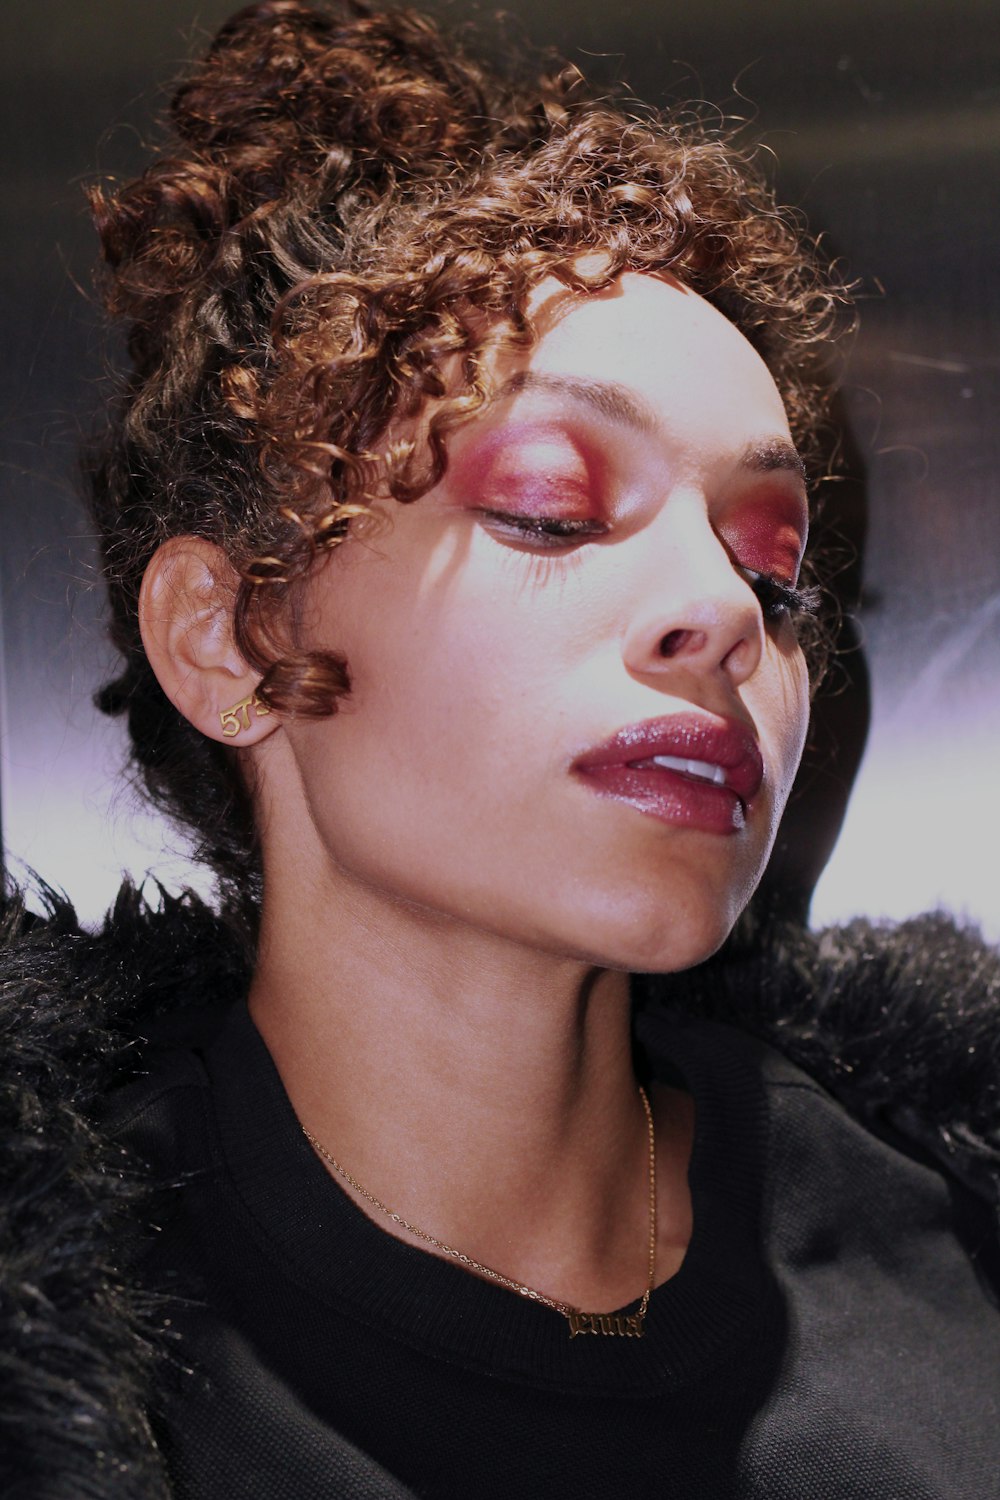 woman wearing black top and pink eyeshadow